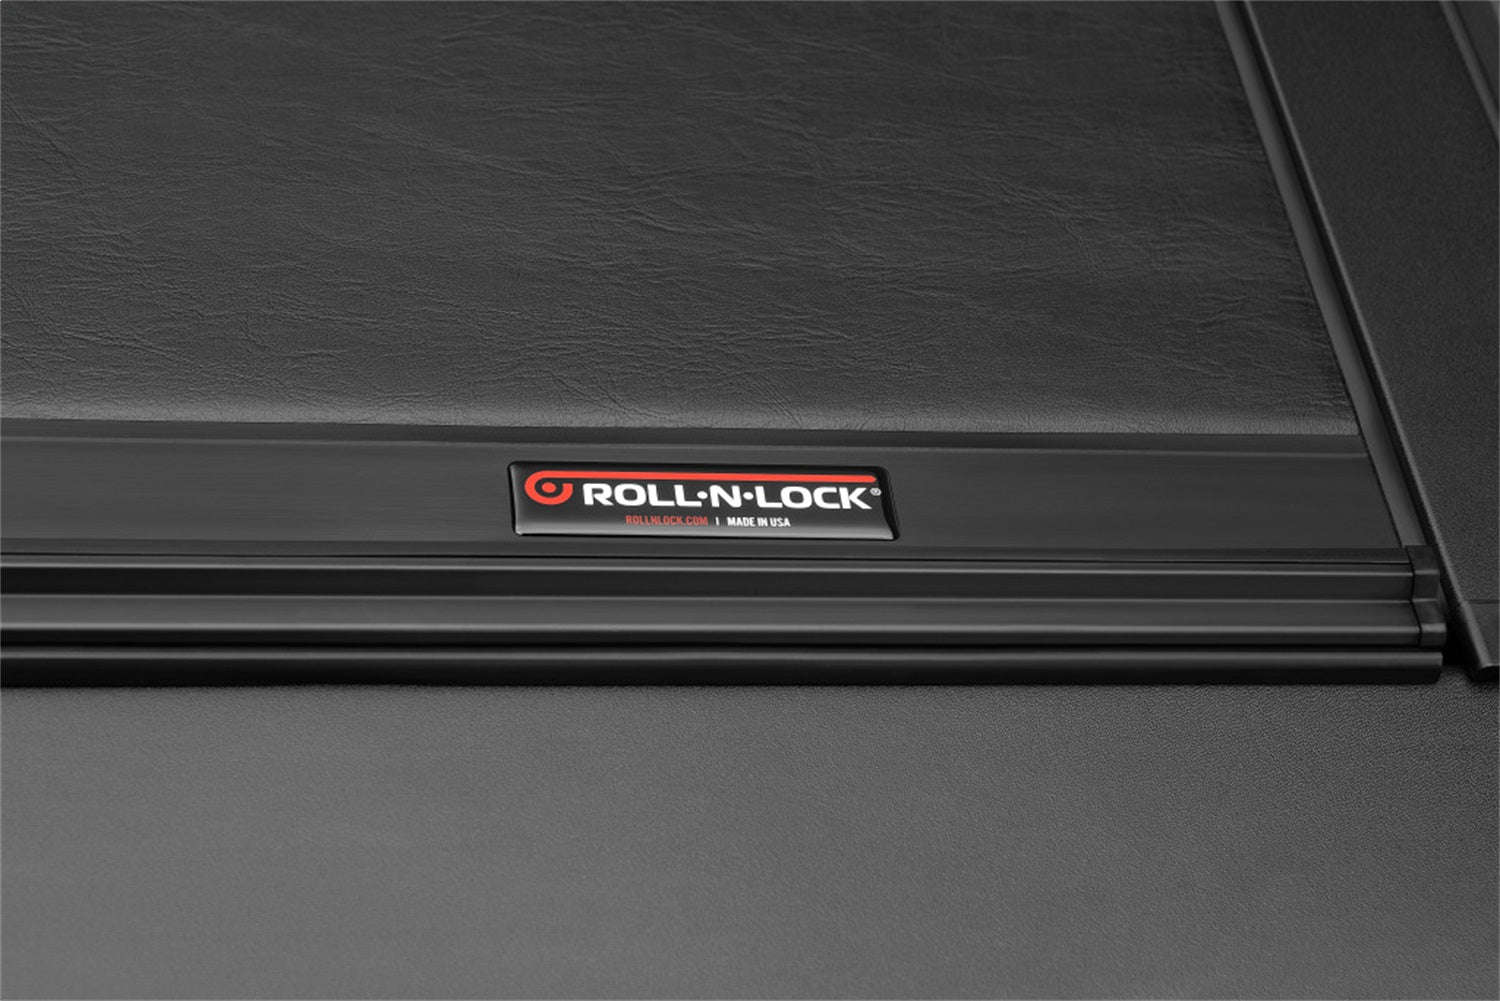 Roll-N-Lock LG401M Roll-N-Lock M-Series Truck Bed Cover Fits 19-22 1500